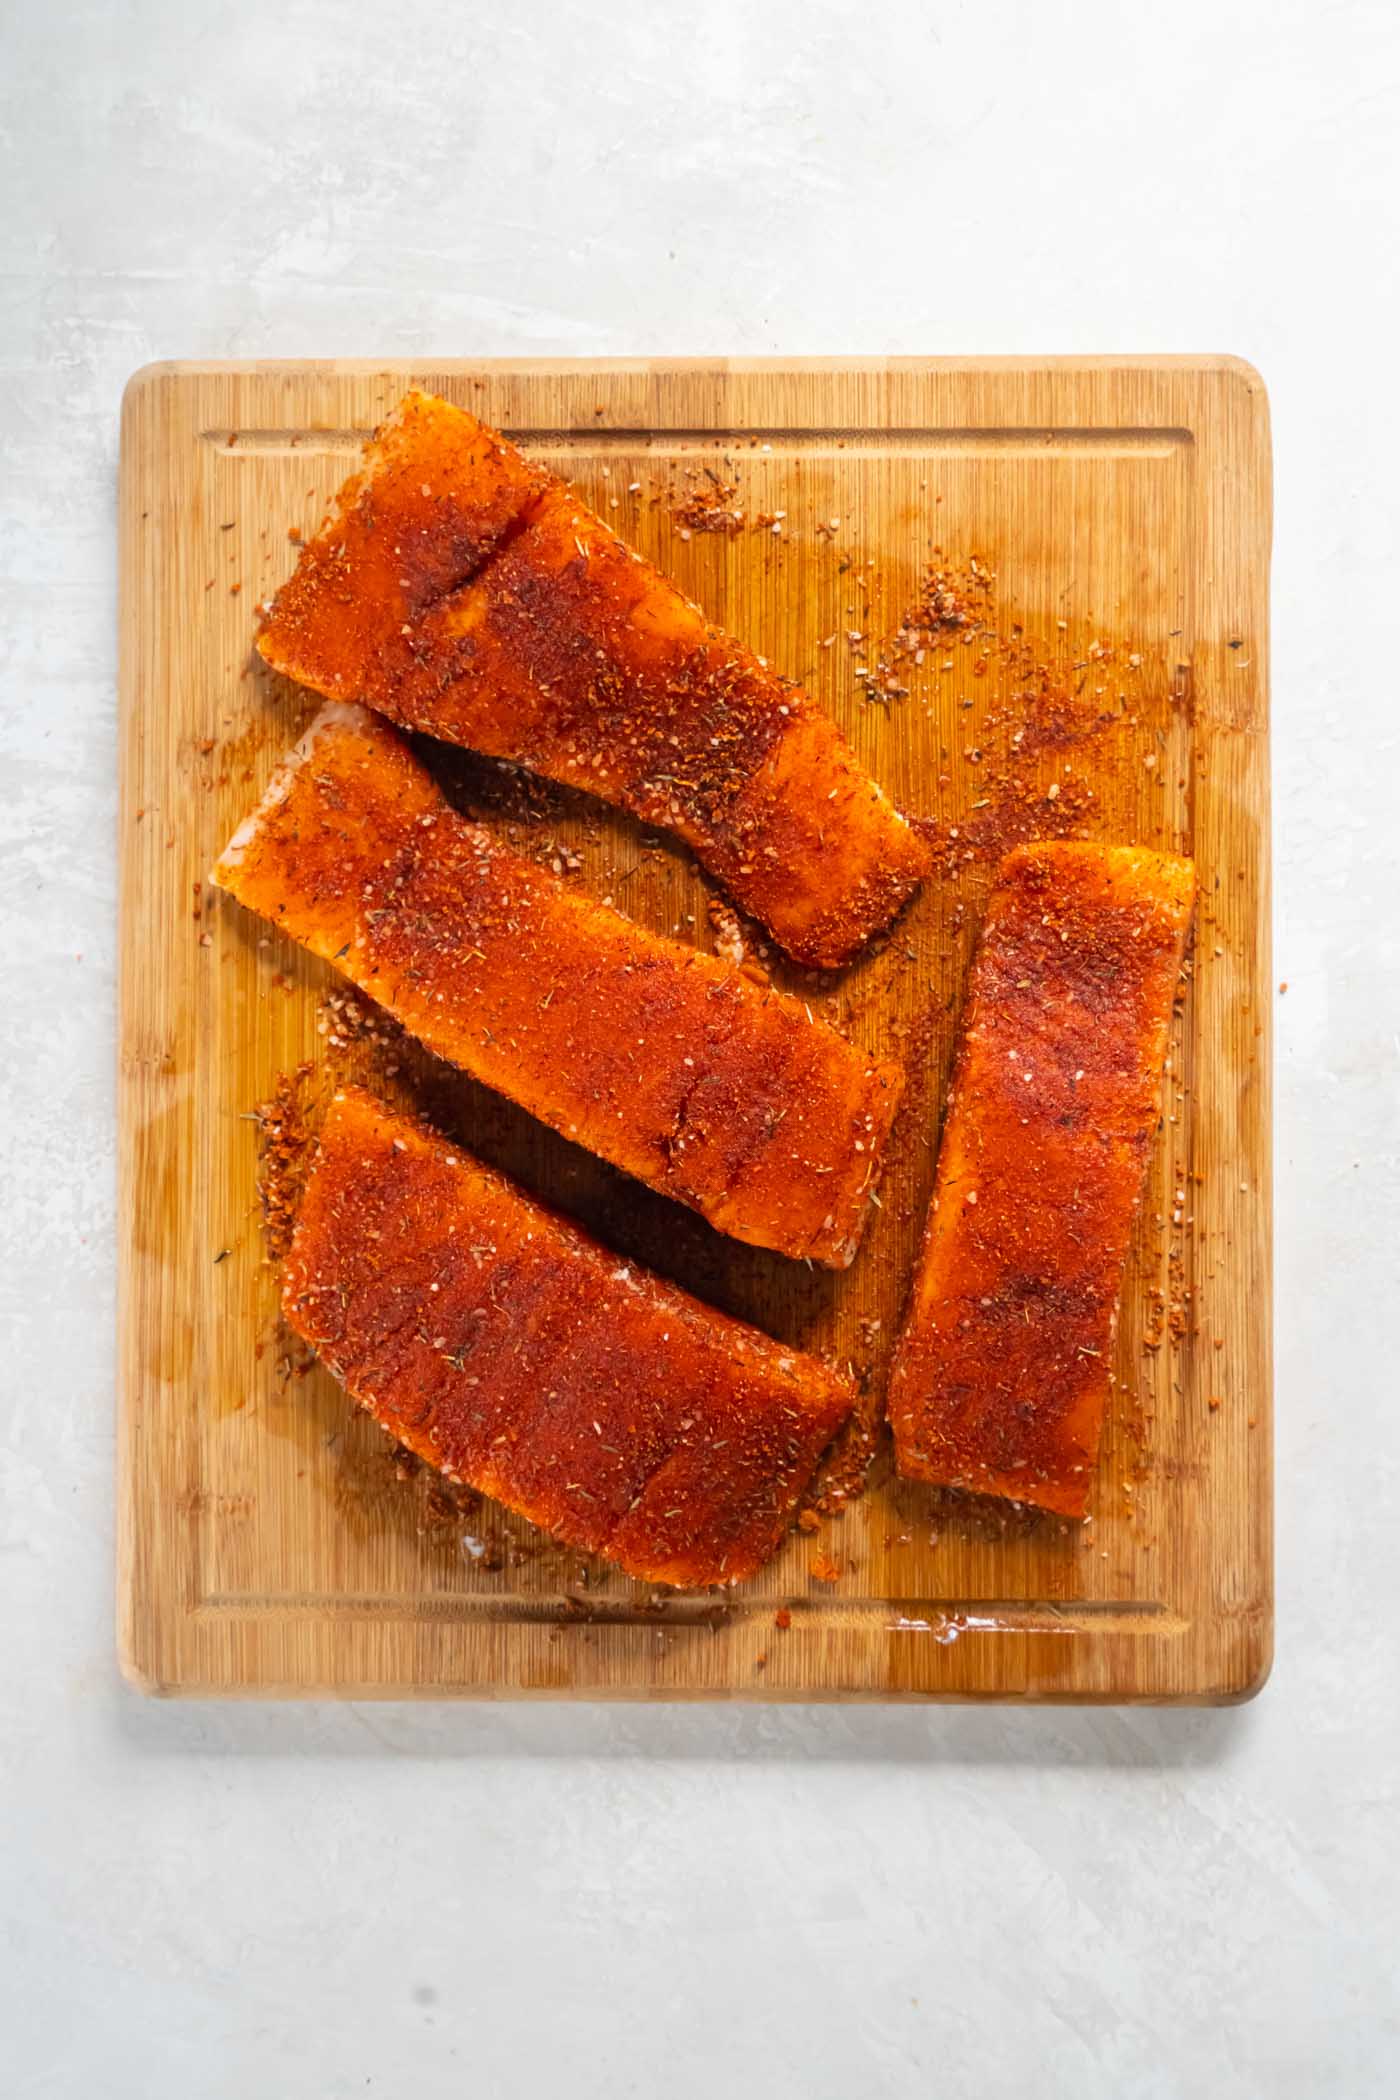 Four seasoned raw salmon fillets on a cutting board.